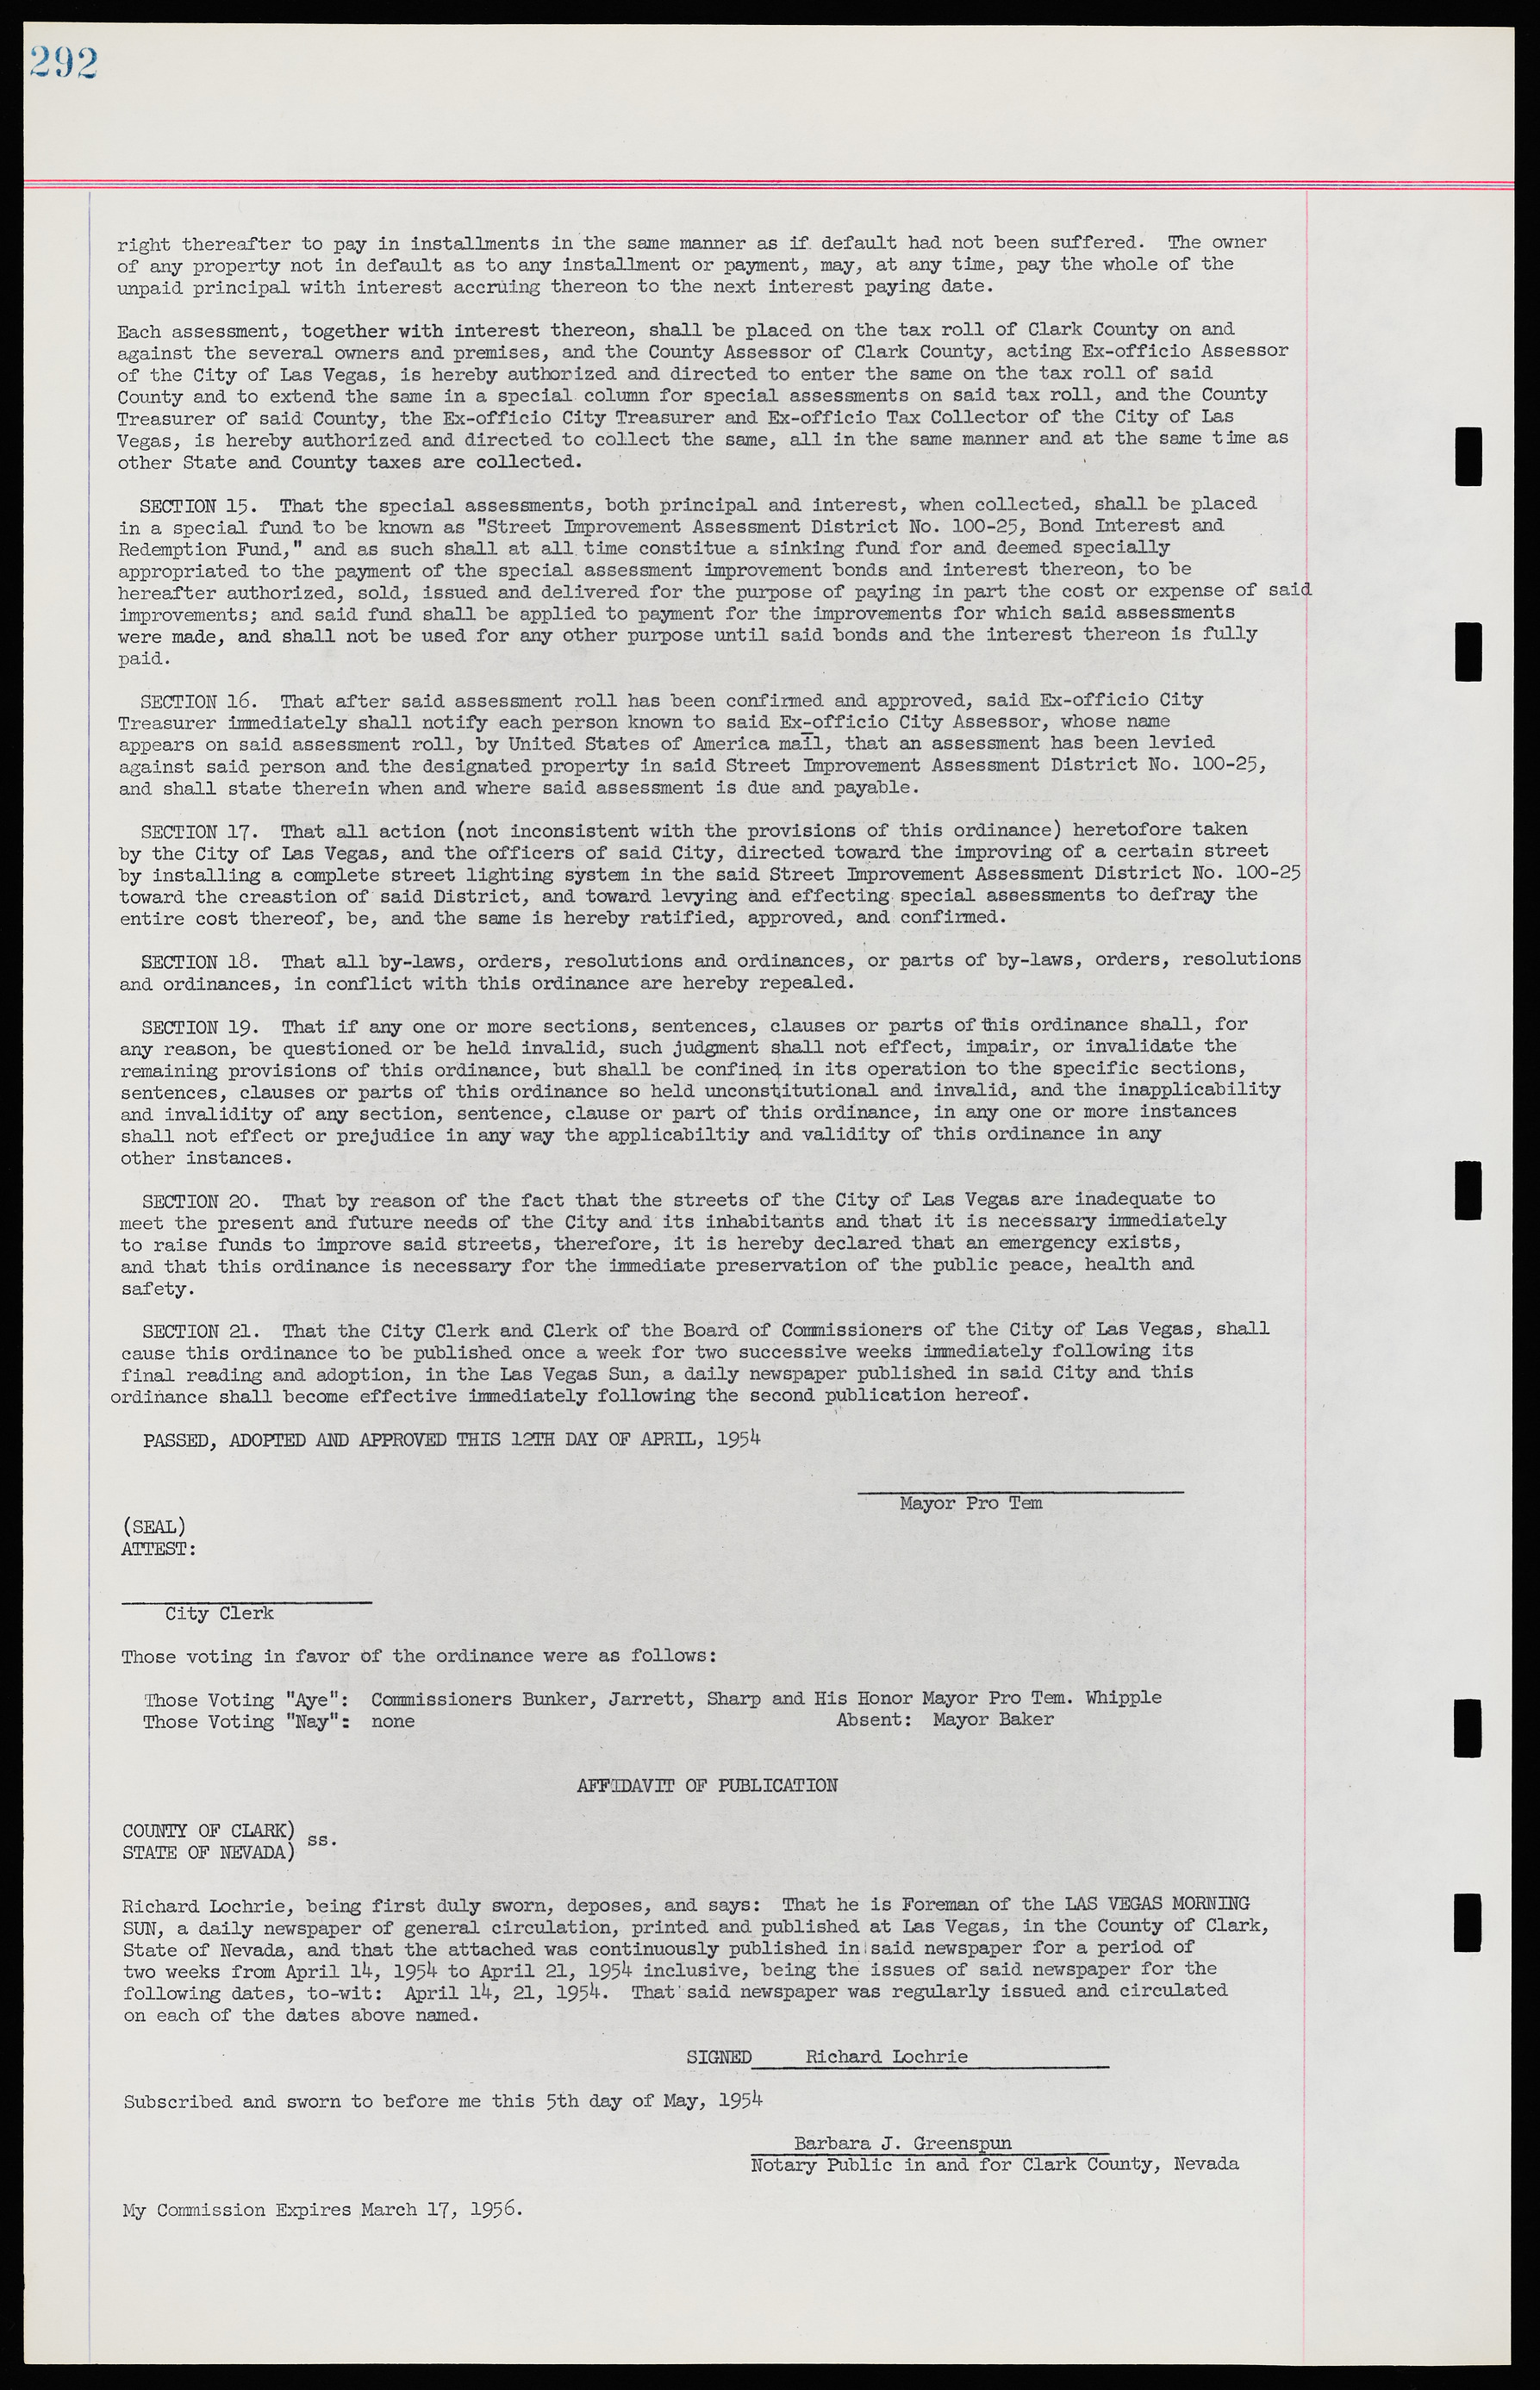 Las Vegas City Ordinances, November 13, 1950 to August 6, 1958, lvc000015-300